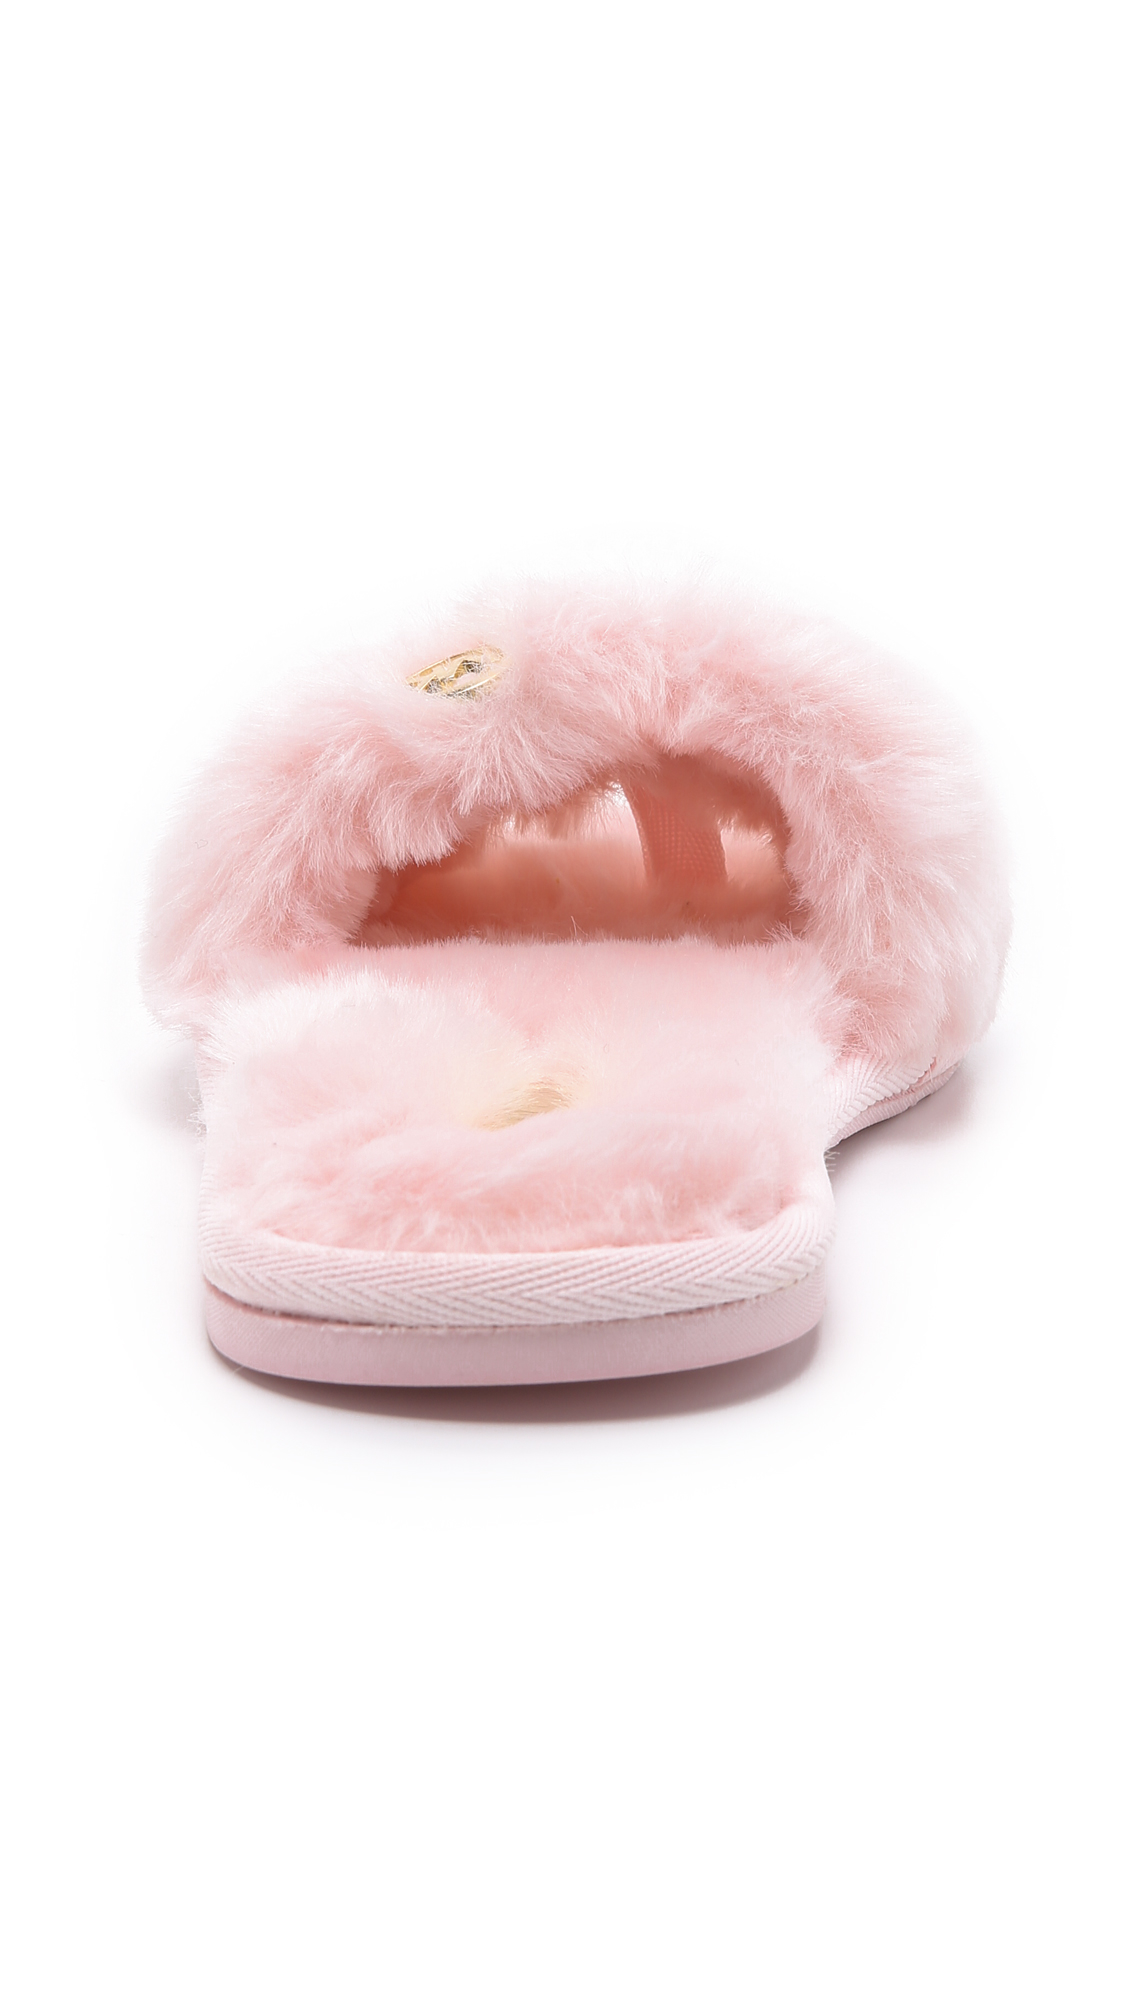 michael kors pink fur slippers